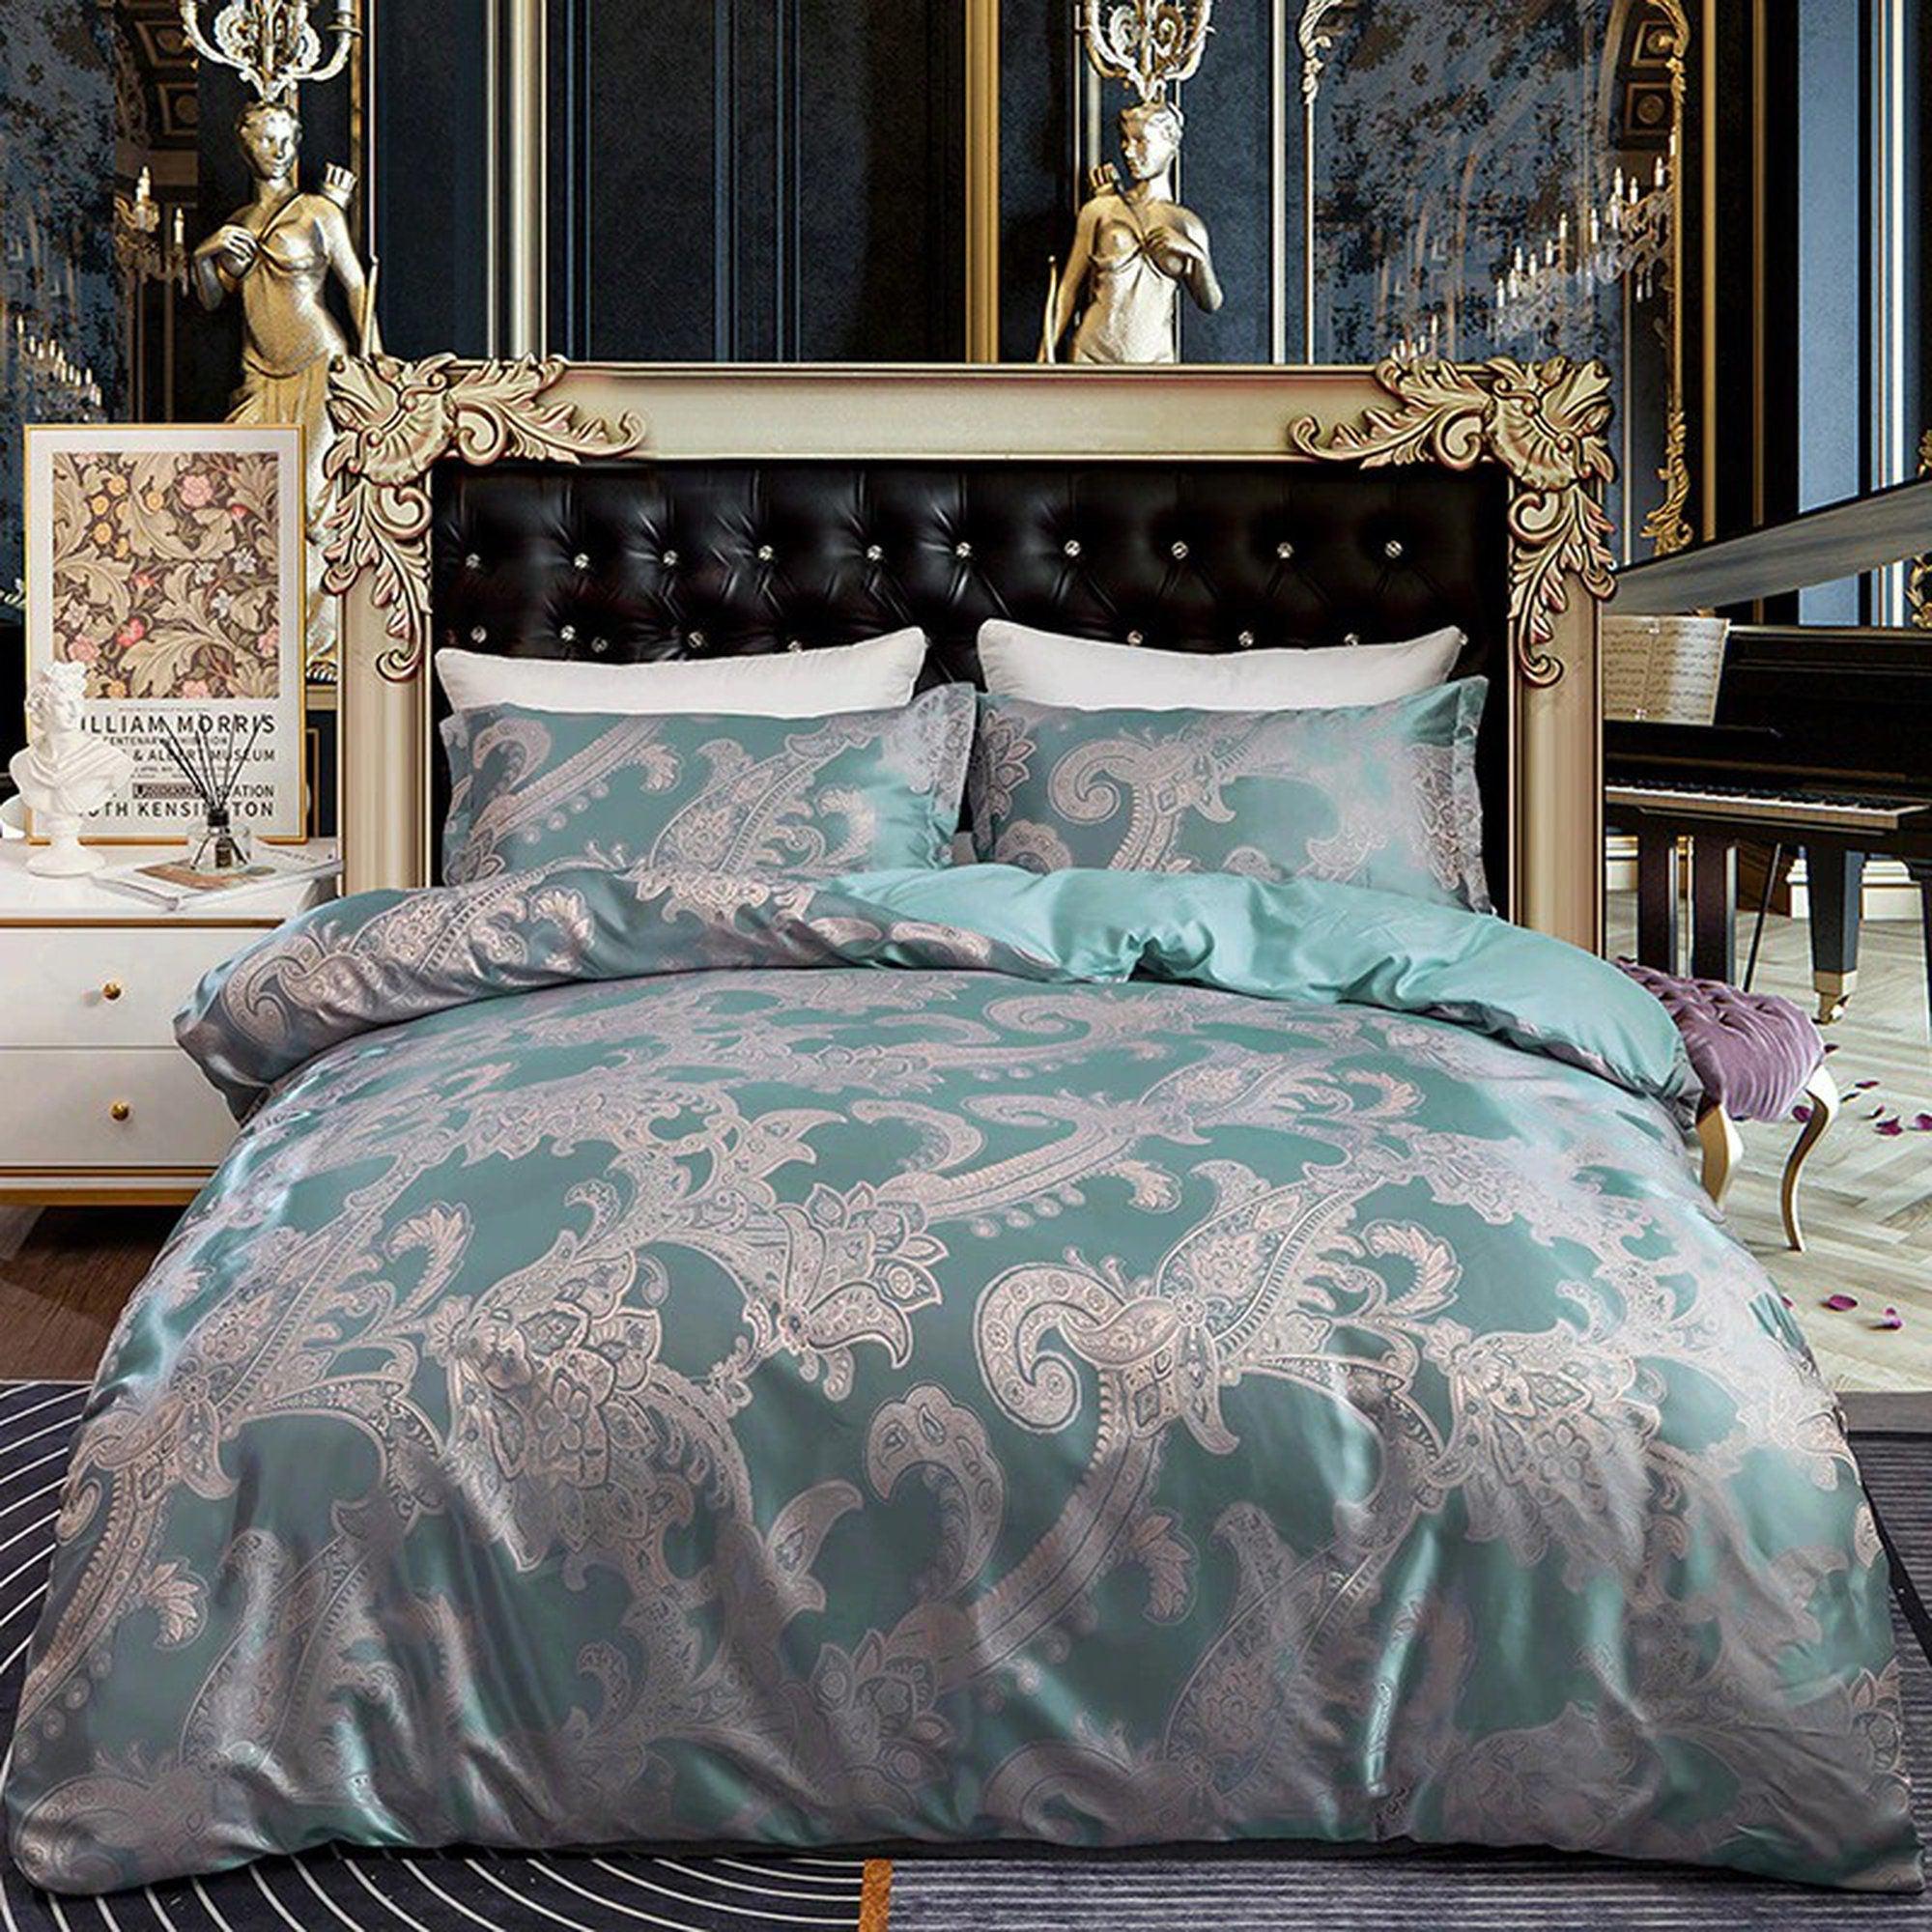 daintyduvet Pastel Green Luxury Bedding made with Silky Jacquard Fabric, Damask Duvet Cover Set, Designer Bedding, Aesthetic Duvet King Queen Full Twin